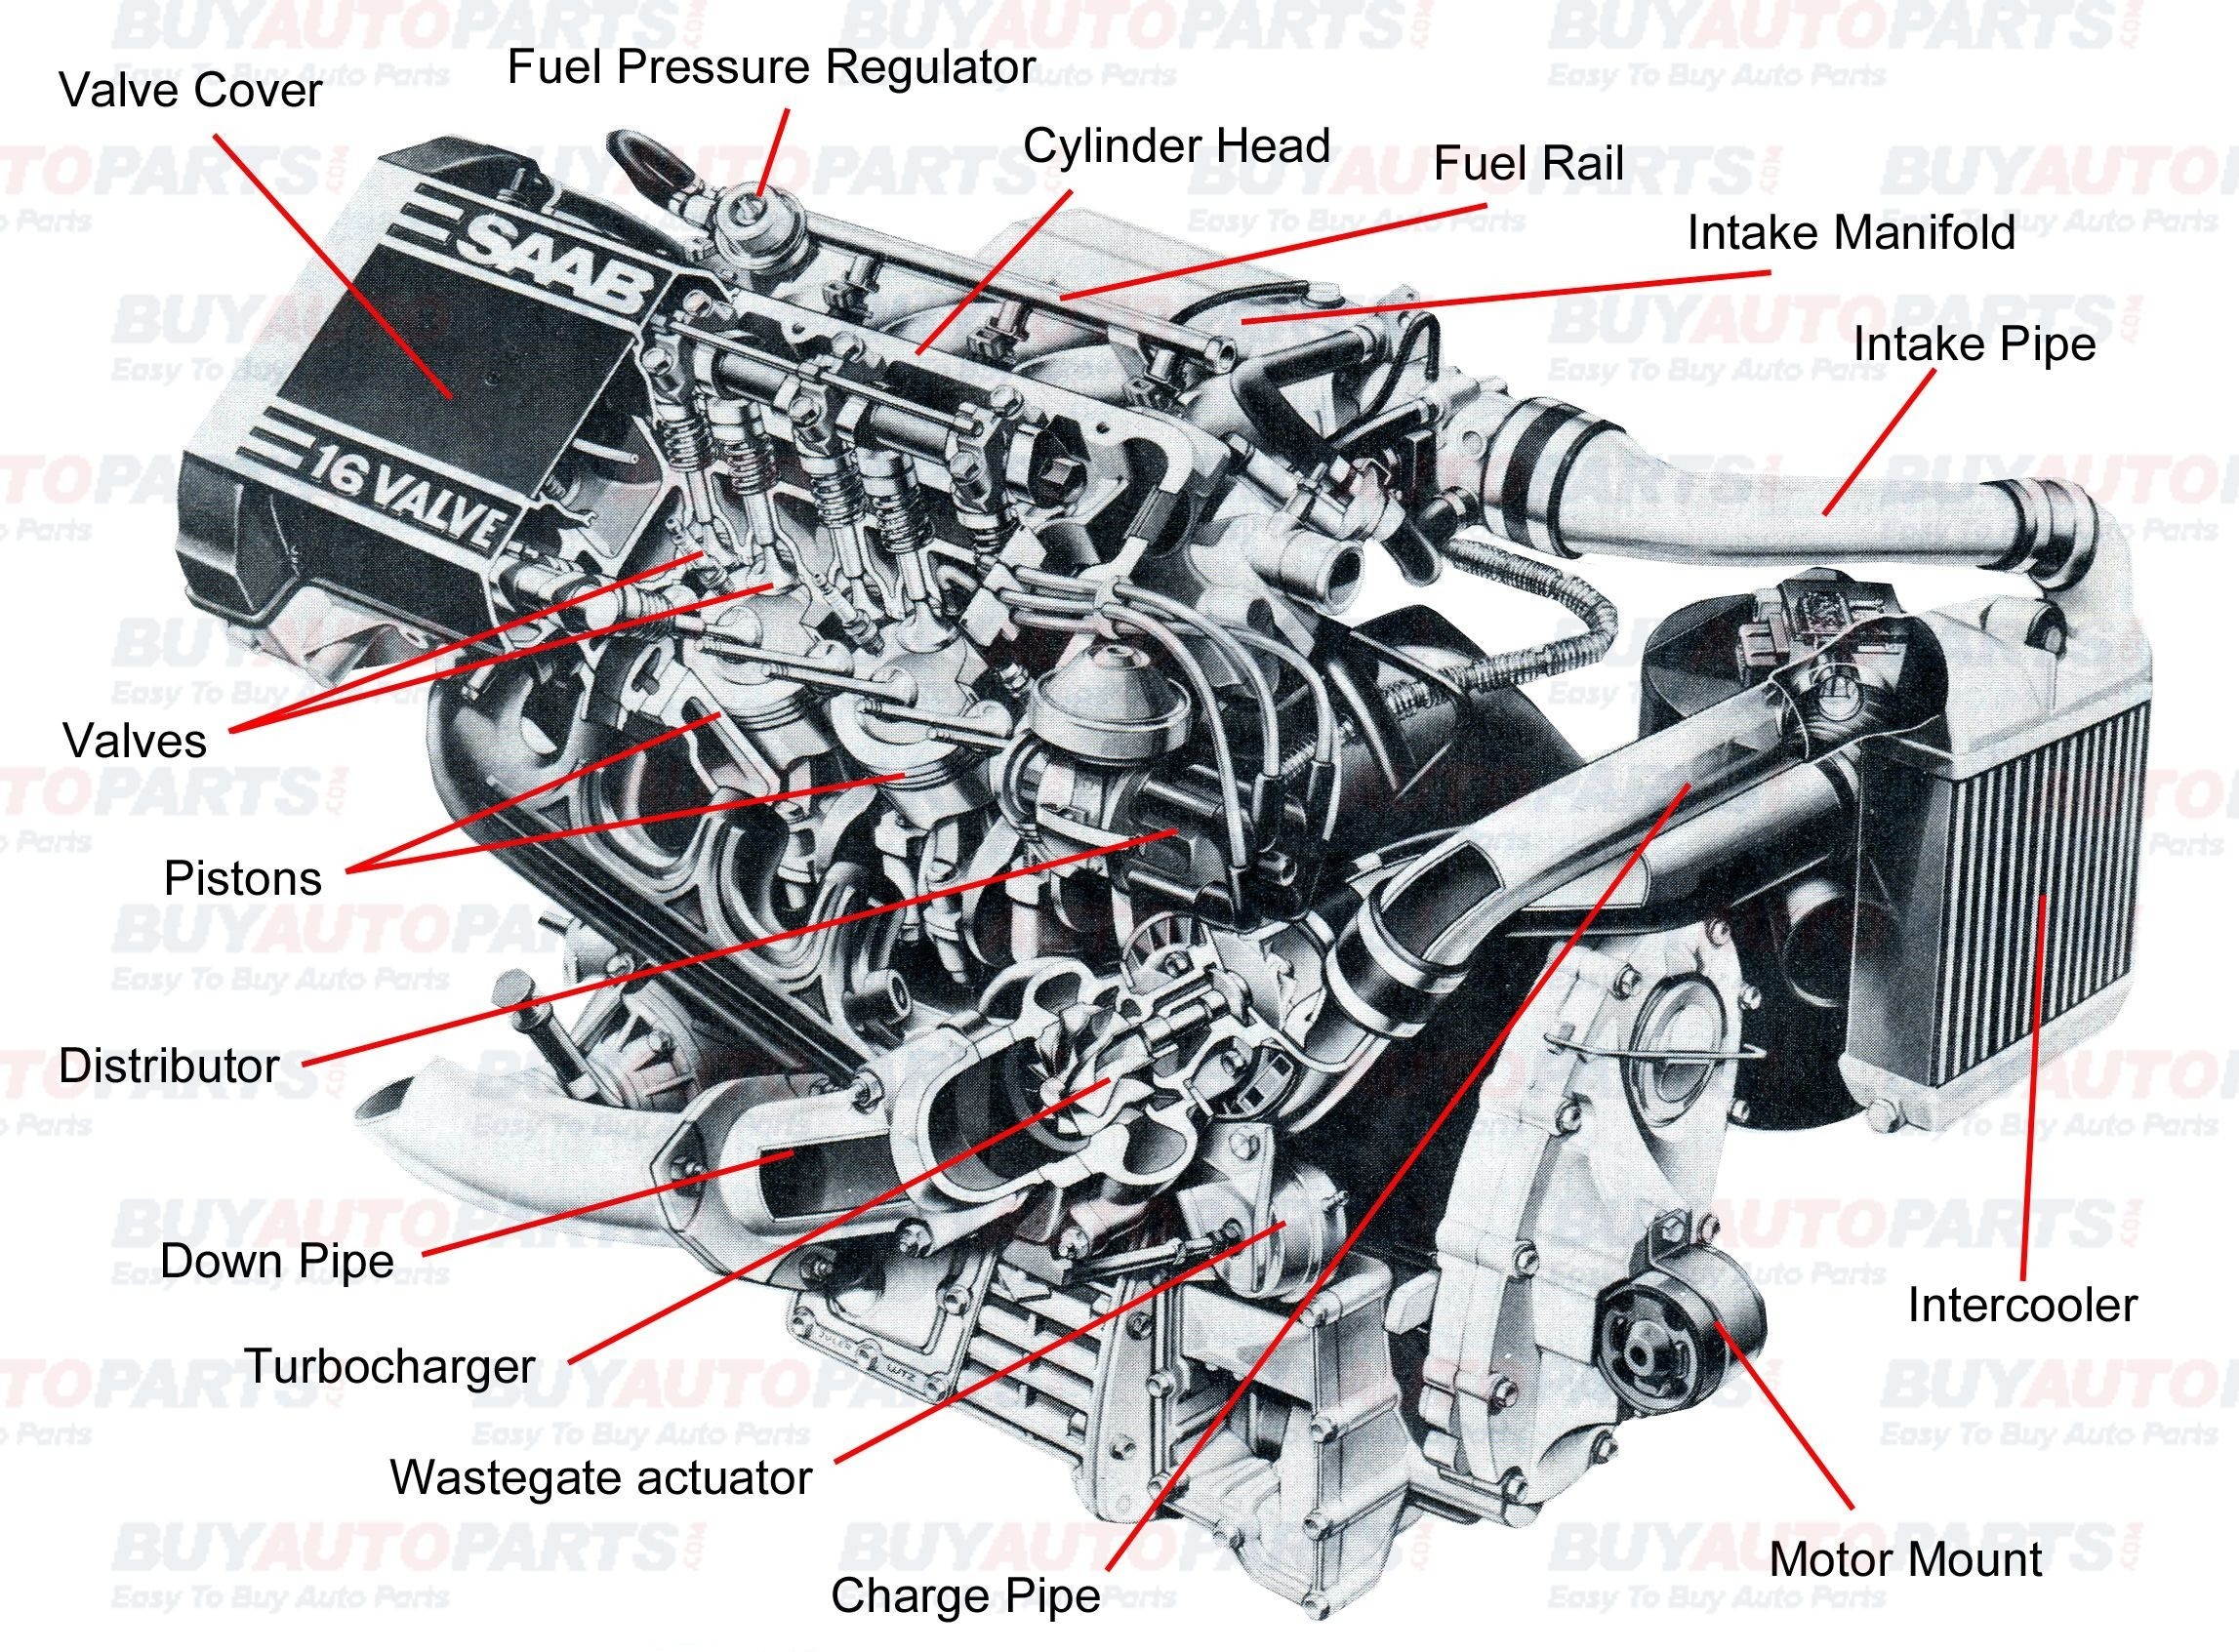 Parts Of Engine Diagram Car Diagram Unique Car Parts and Diagrams Insignia Se 2 0d – My Of Parts Of Engine Diagram